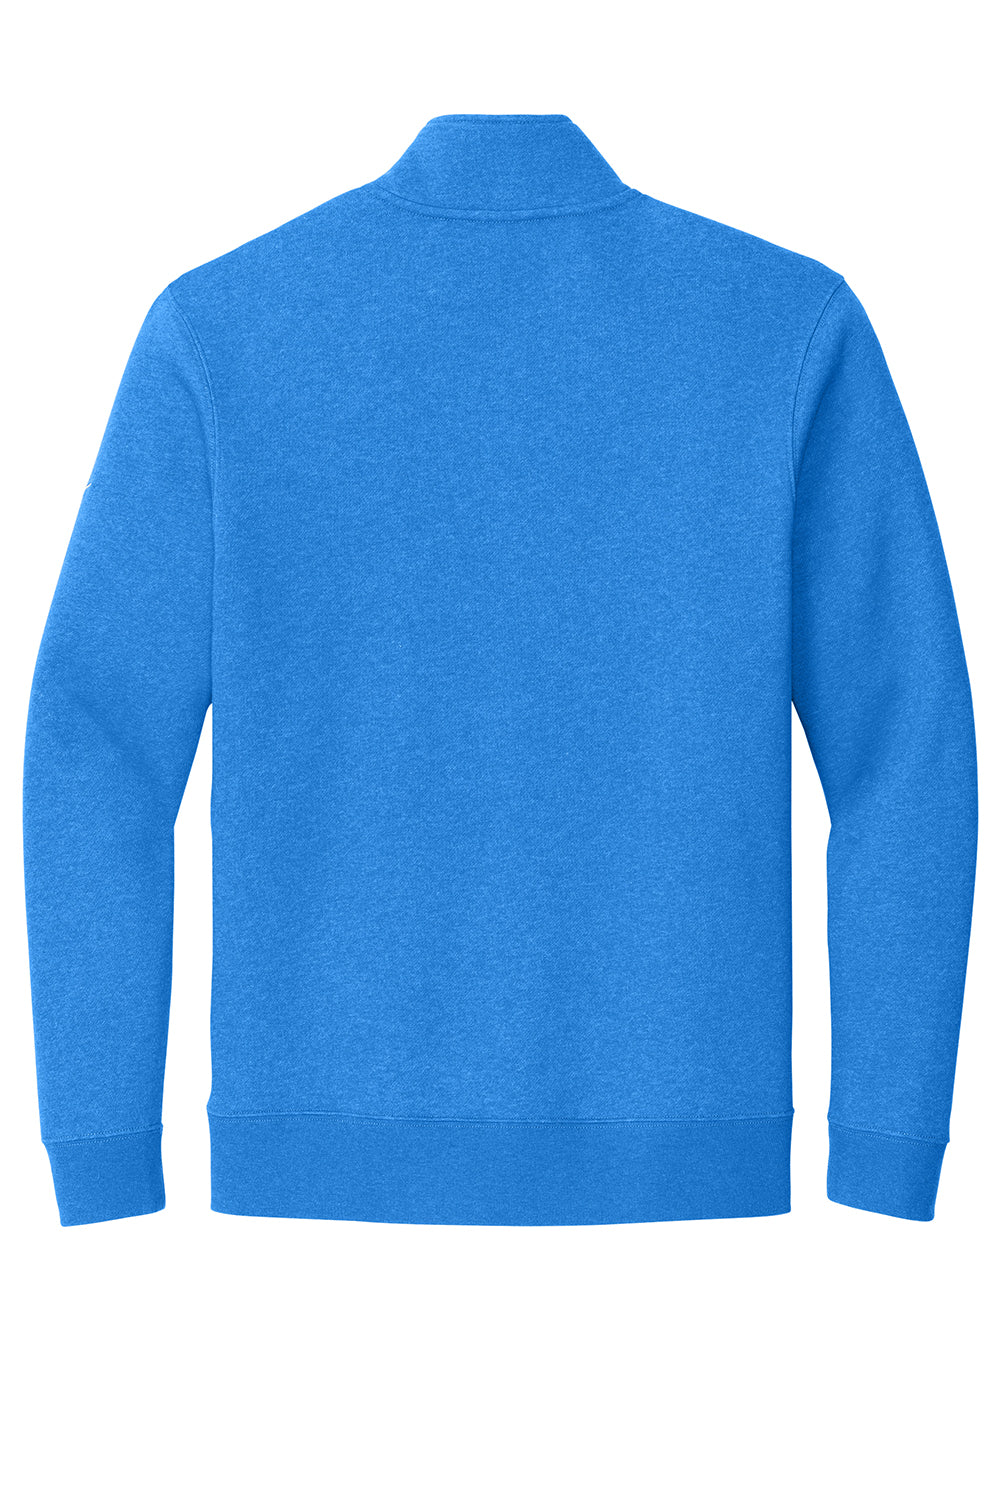 Nike NKDX6718 Mens Club Fleece 1/4 Zip Sweatshirt Heather Light Royal Blue Flat Back